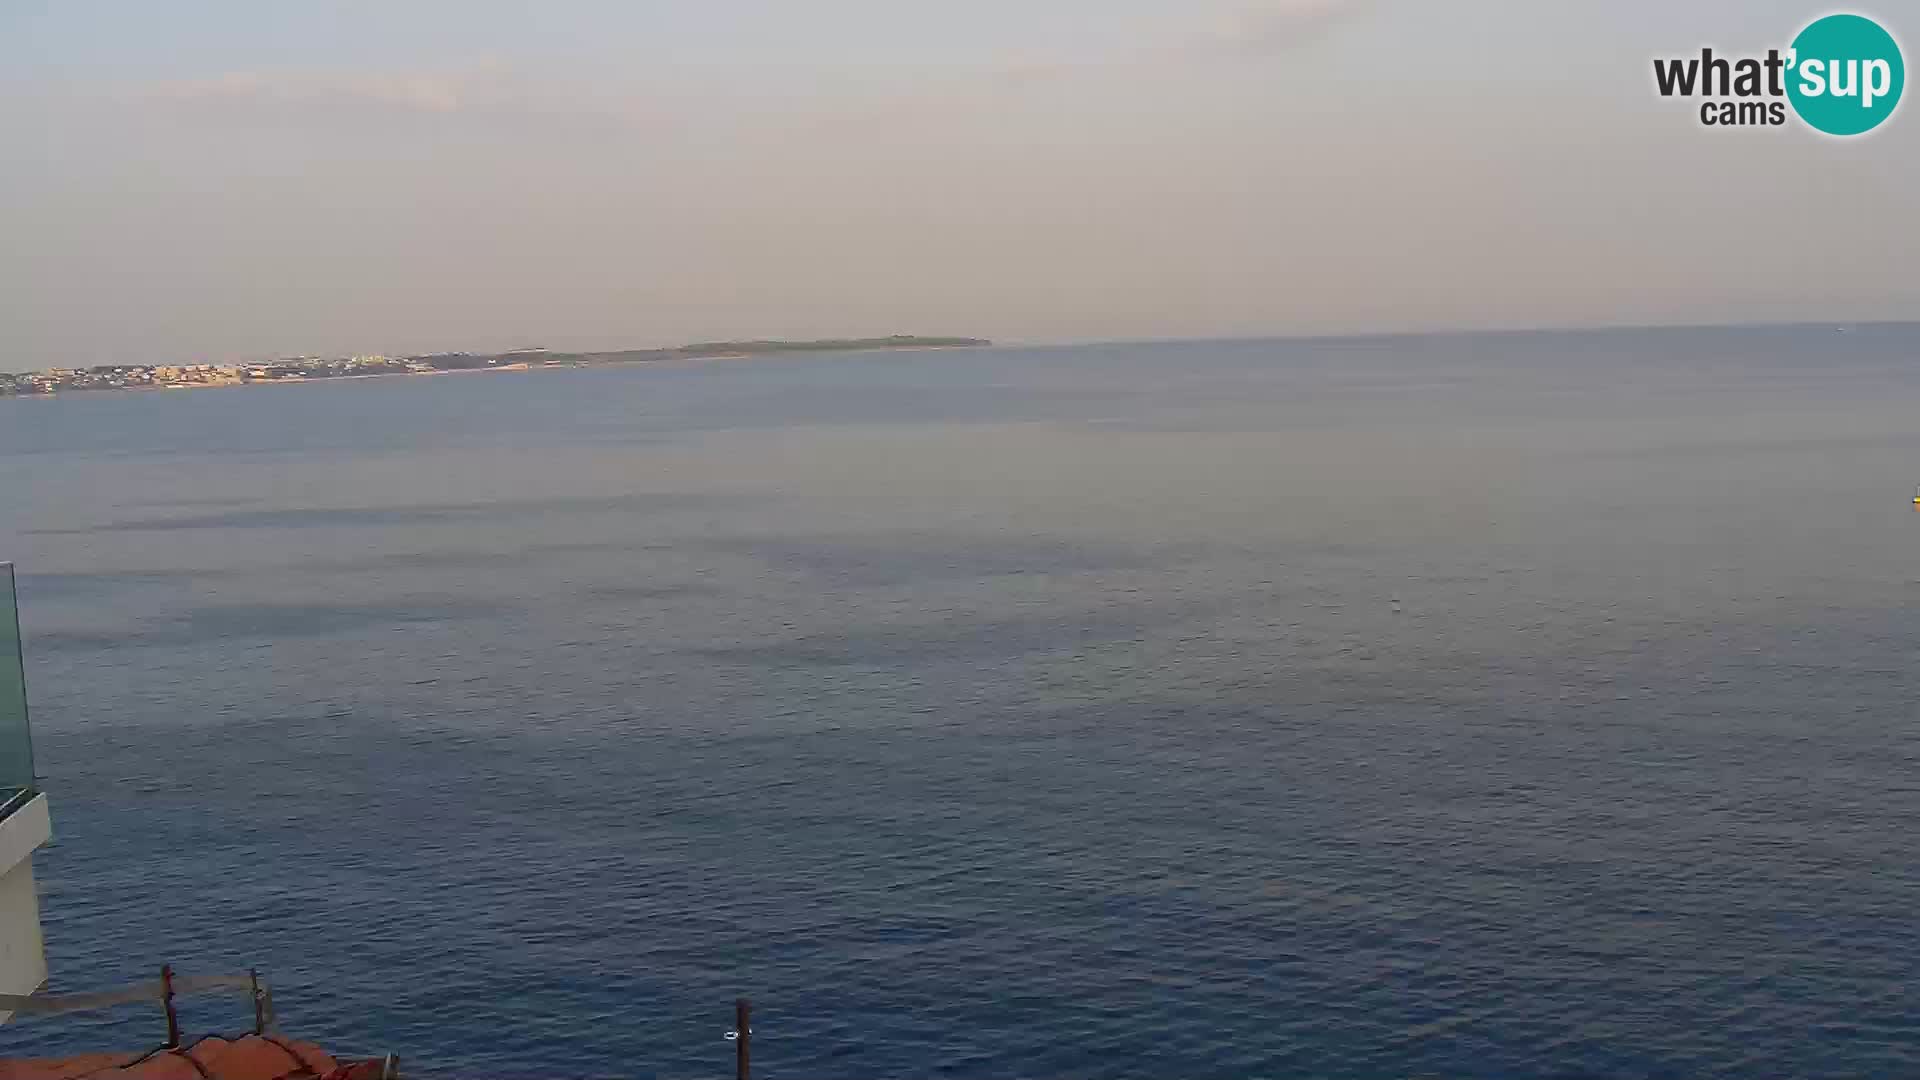 PIRAN Punta webcam | Seaside Promenade | Hotel Piran